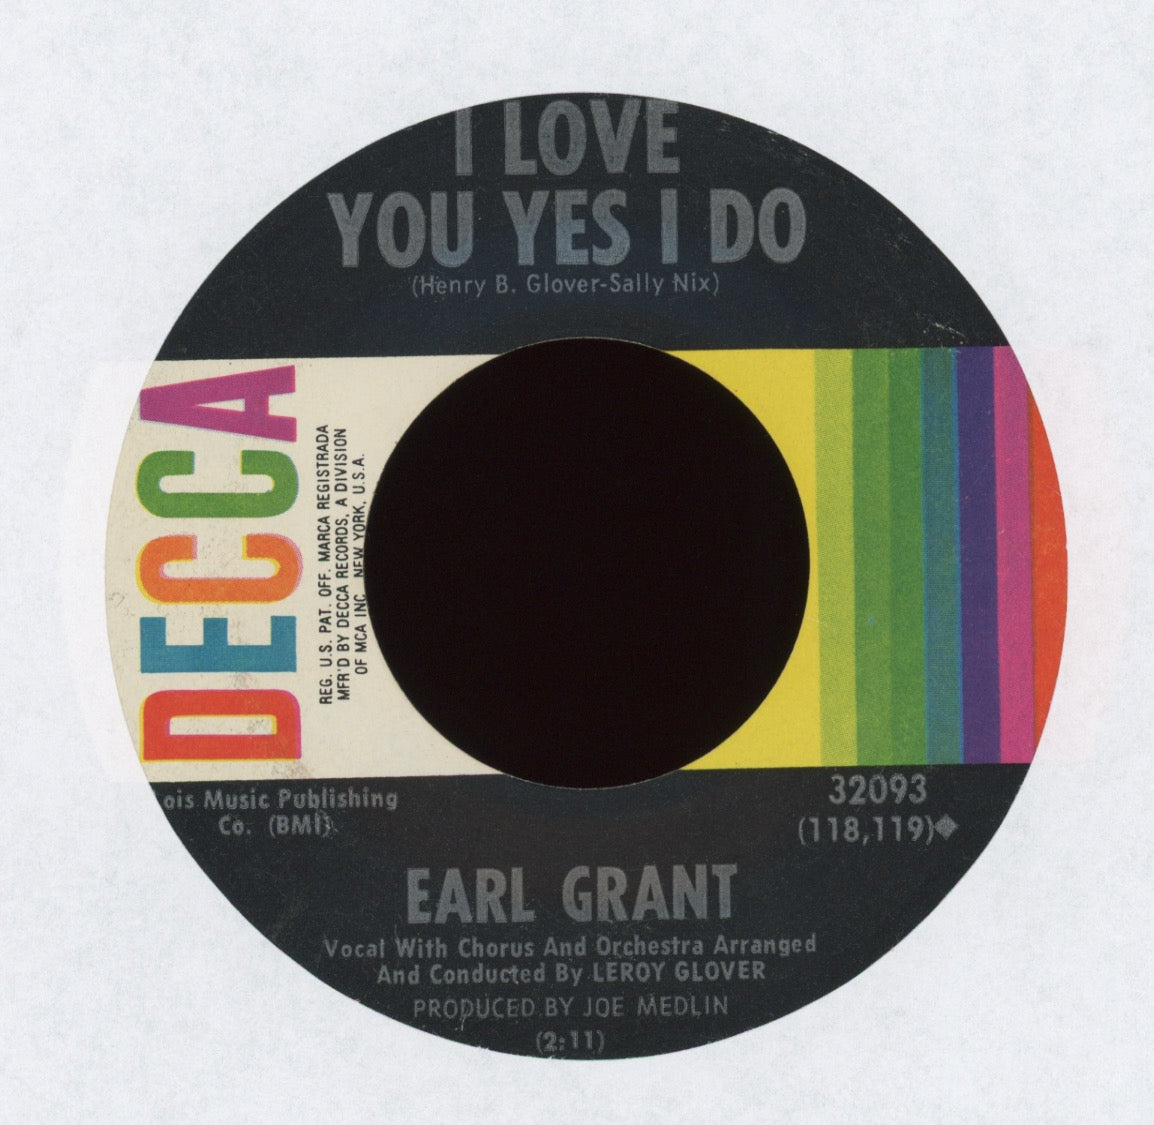 Earl Grant - Hide Nor Hair on Decca